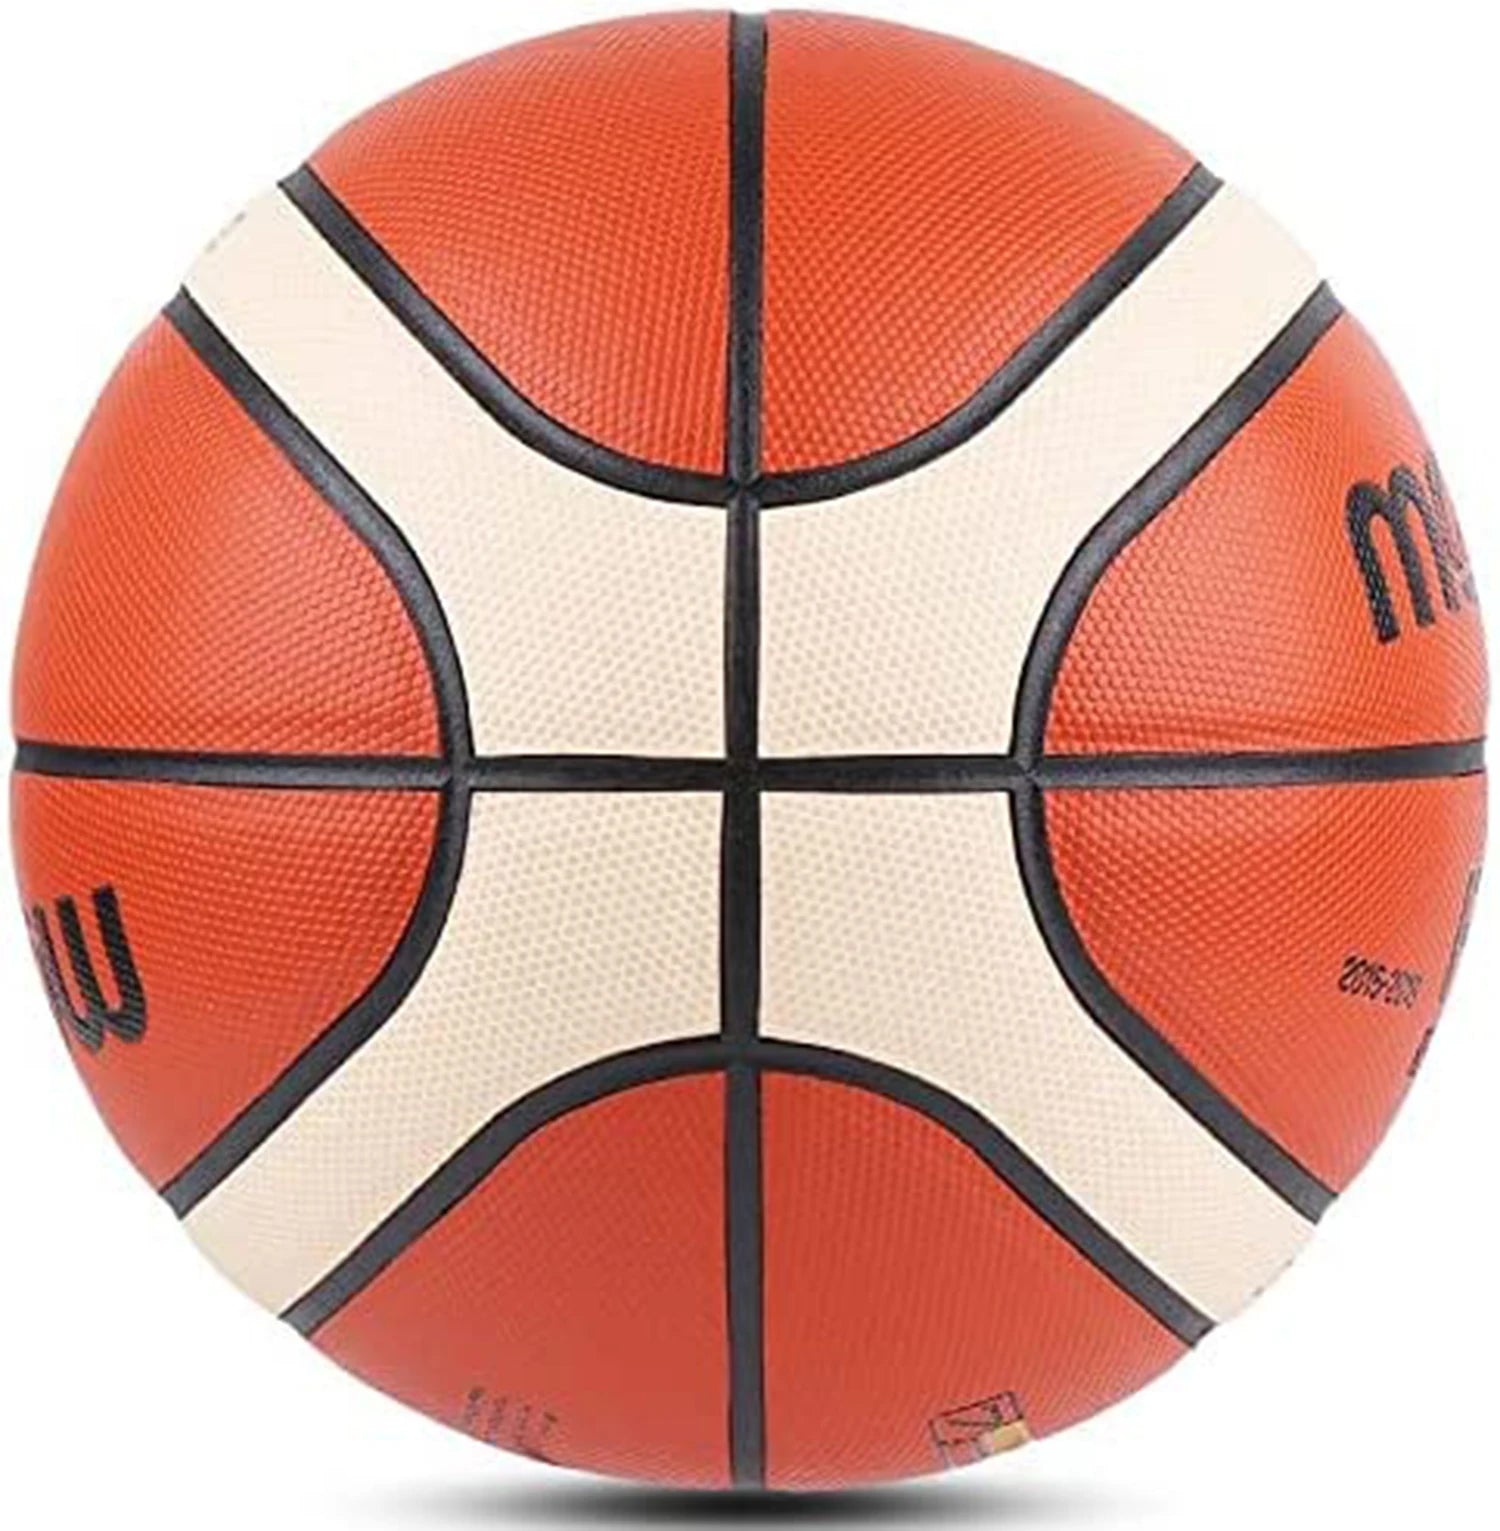 Match Training Basketball PU Material Basketball Official Size Basketball